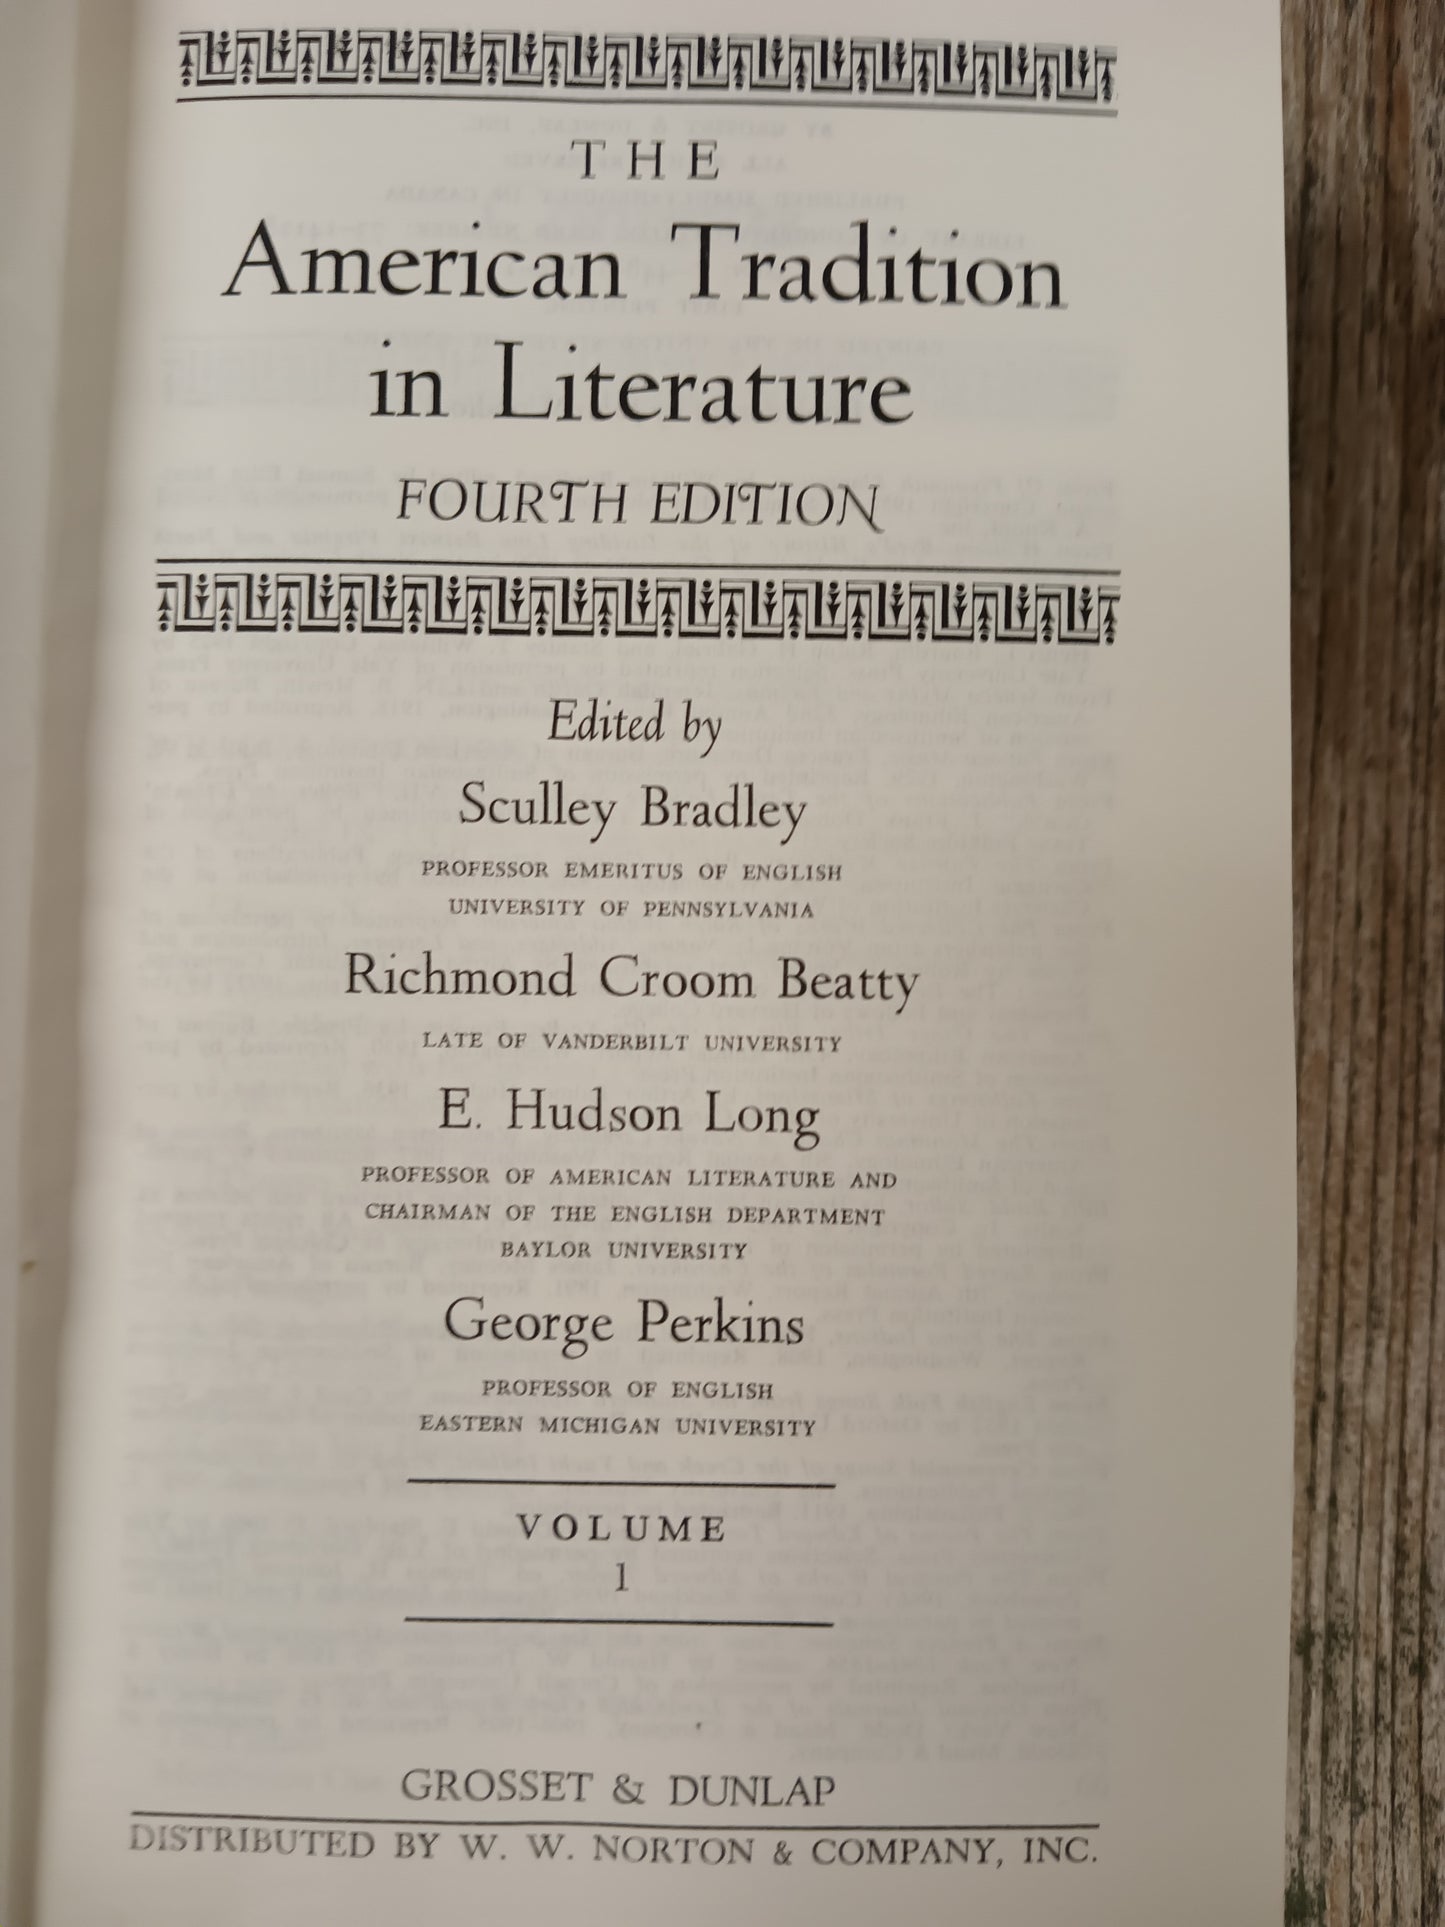 The American Tradition In Literature Vol 1